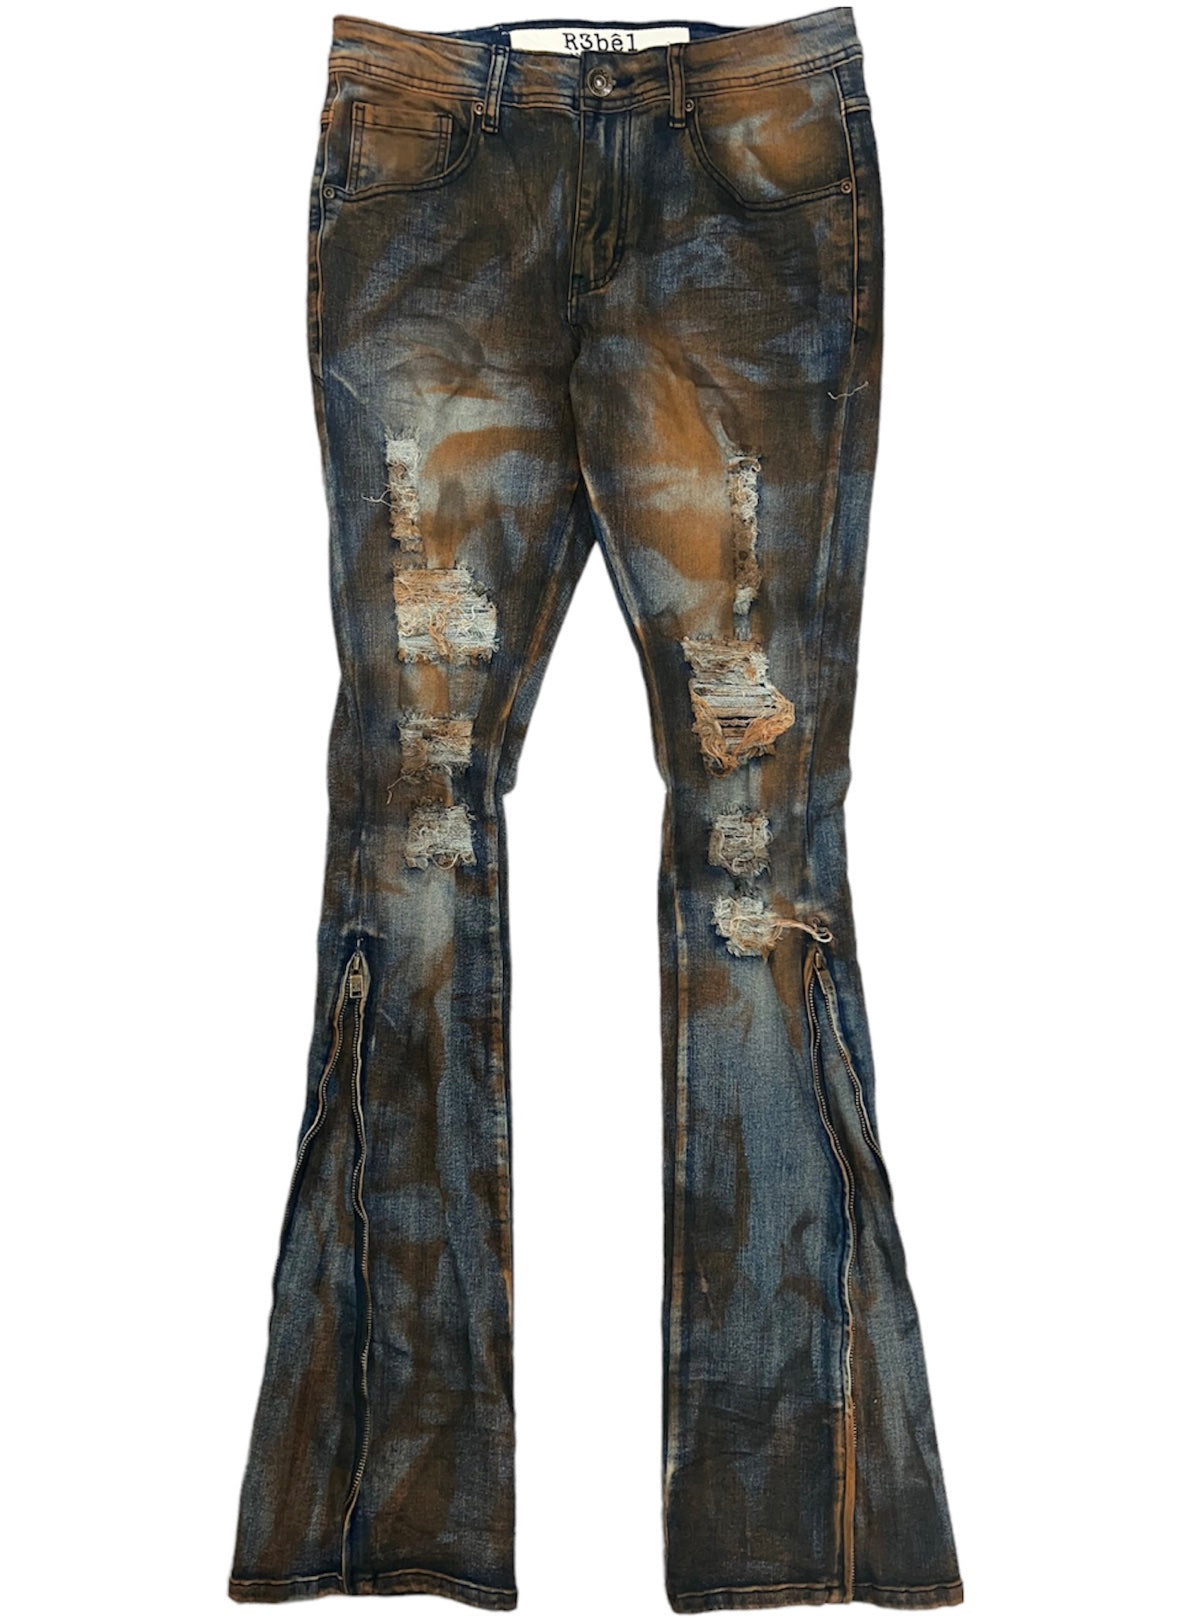 Caliente Distressed Super Flare Jeans *M.A.P* – Rebel Gypsy